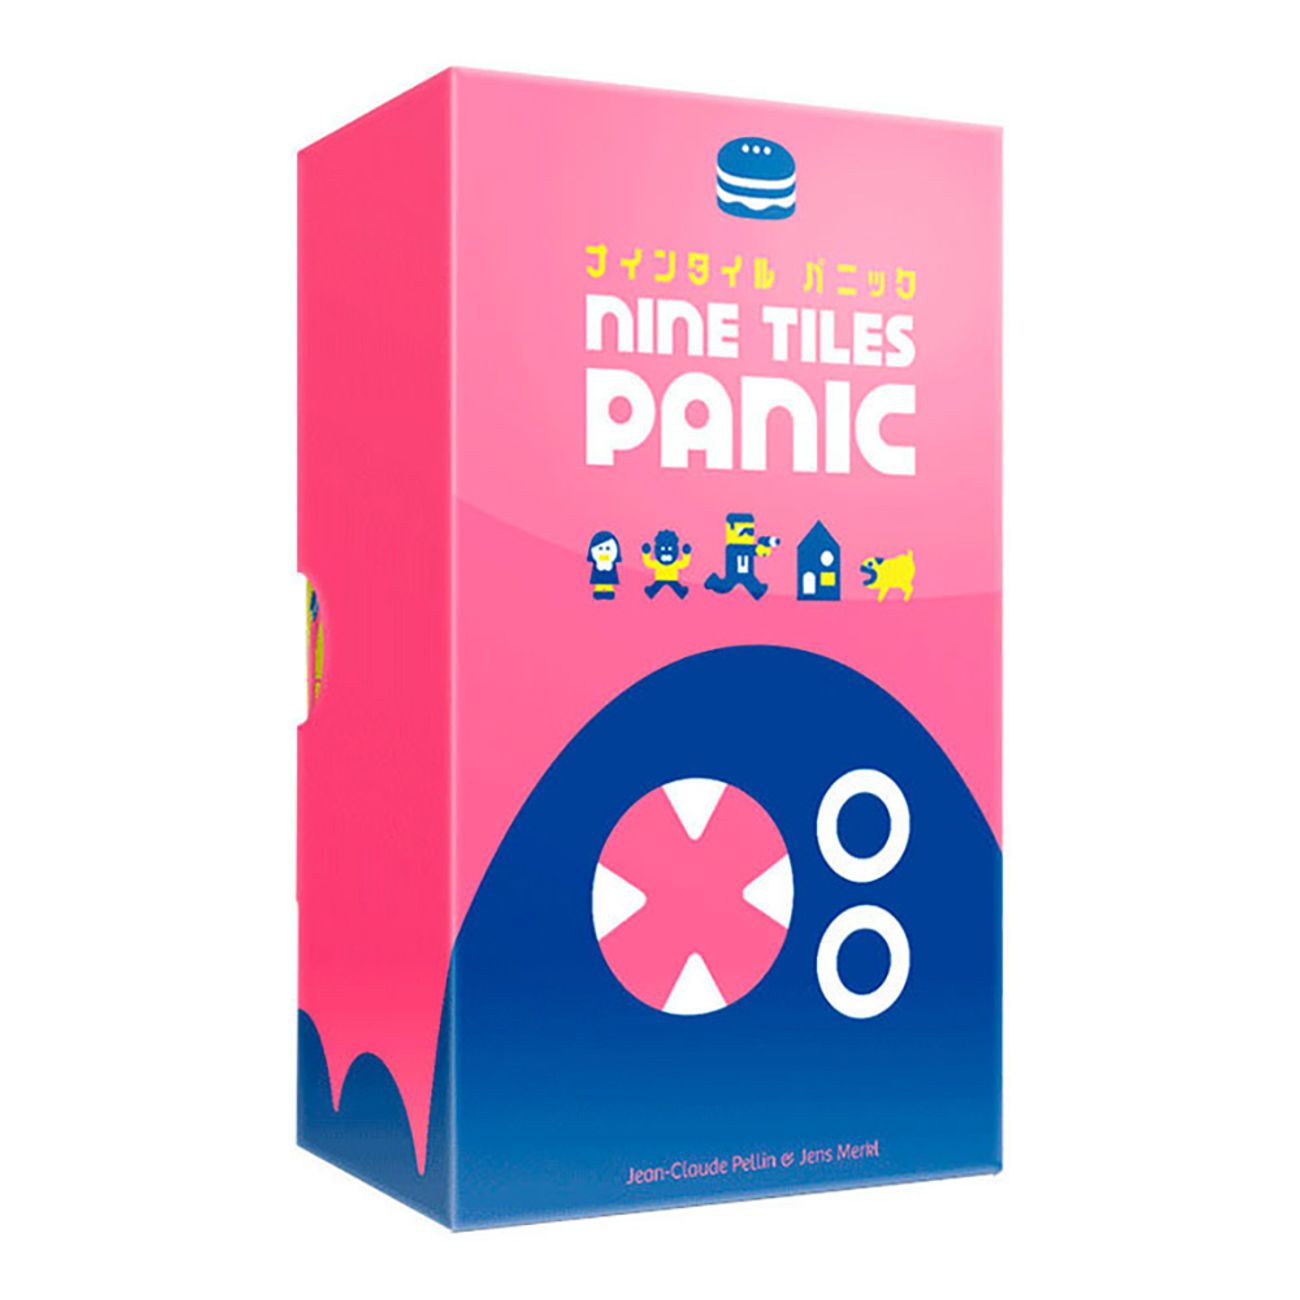 nine-tiles-panic-en-87141-1